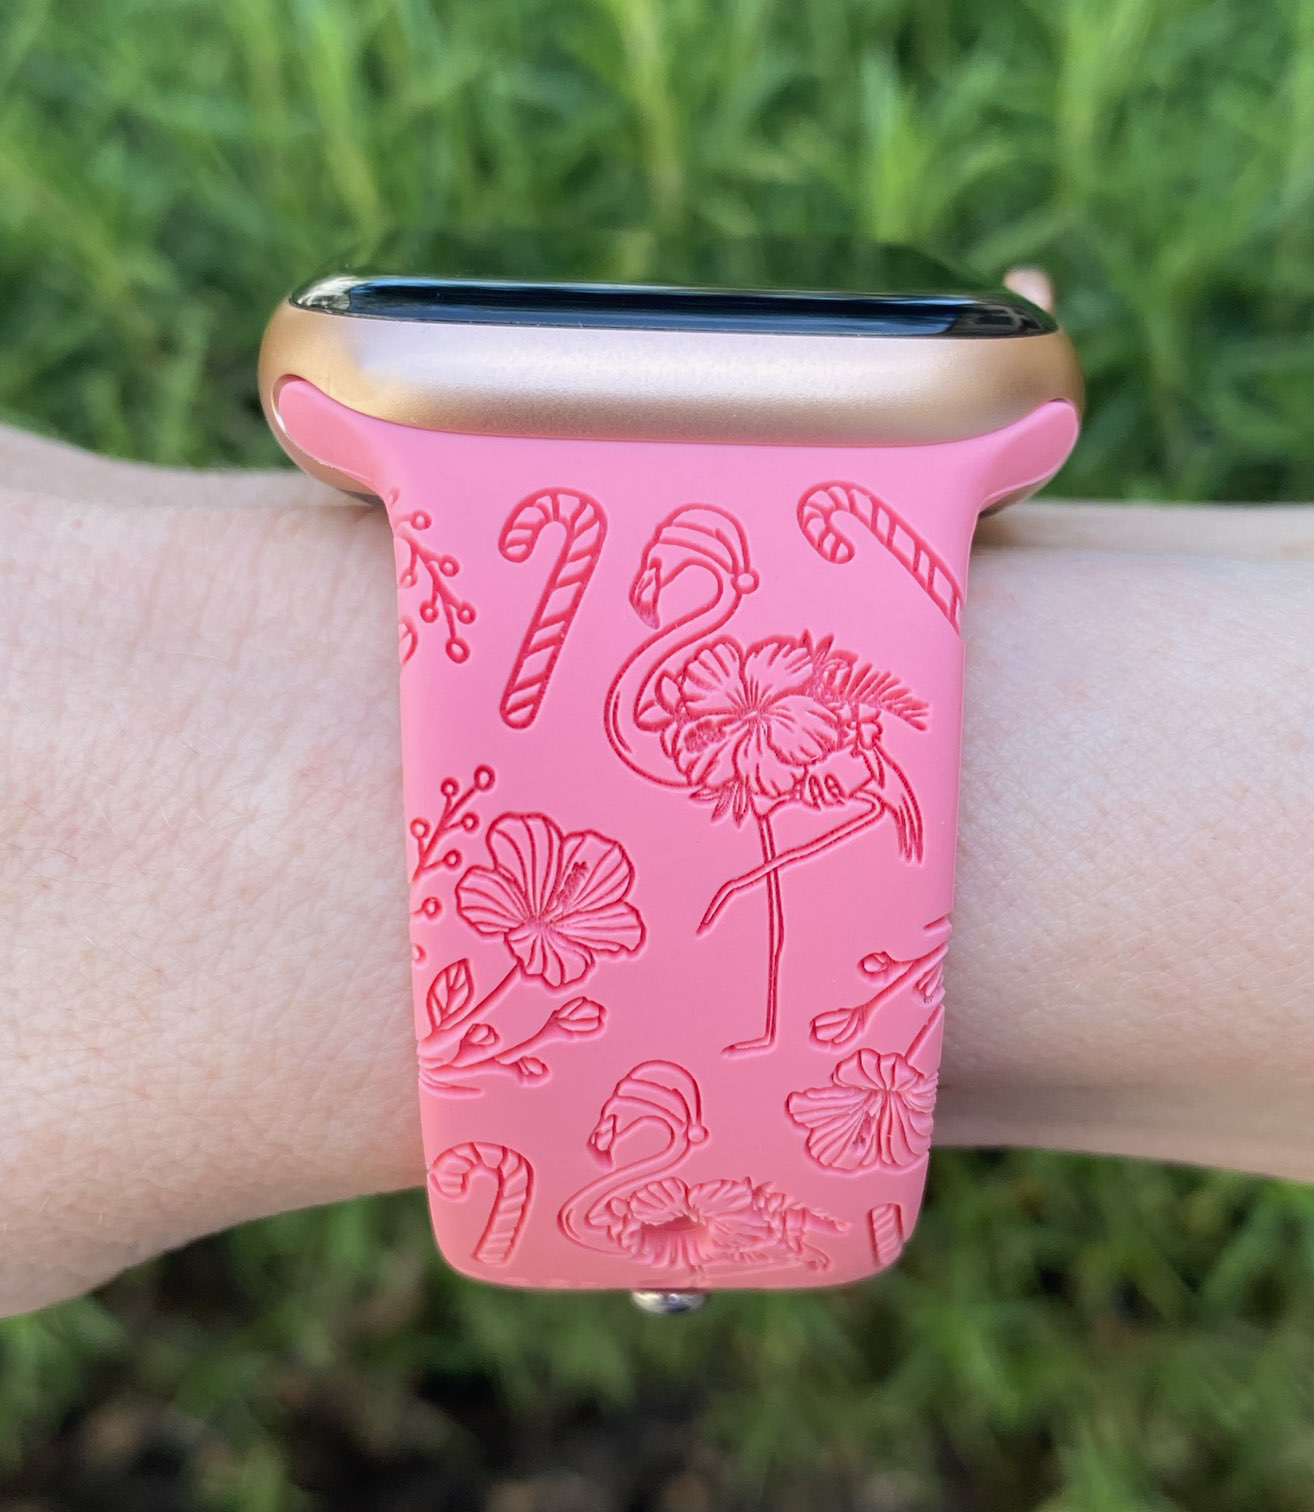 Candy Cane Flamingo Apple Watch Band